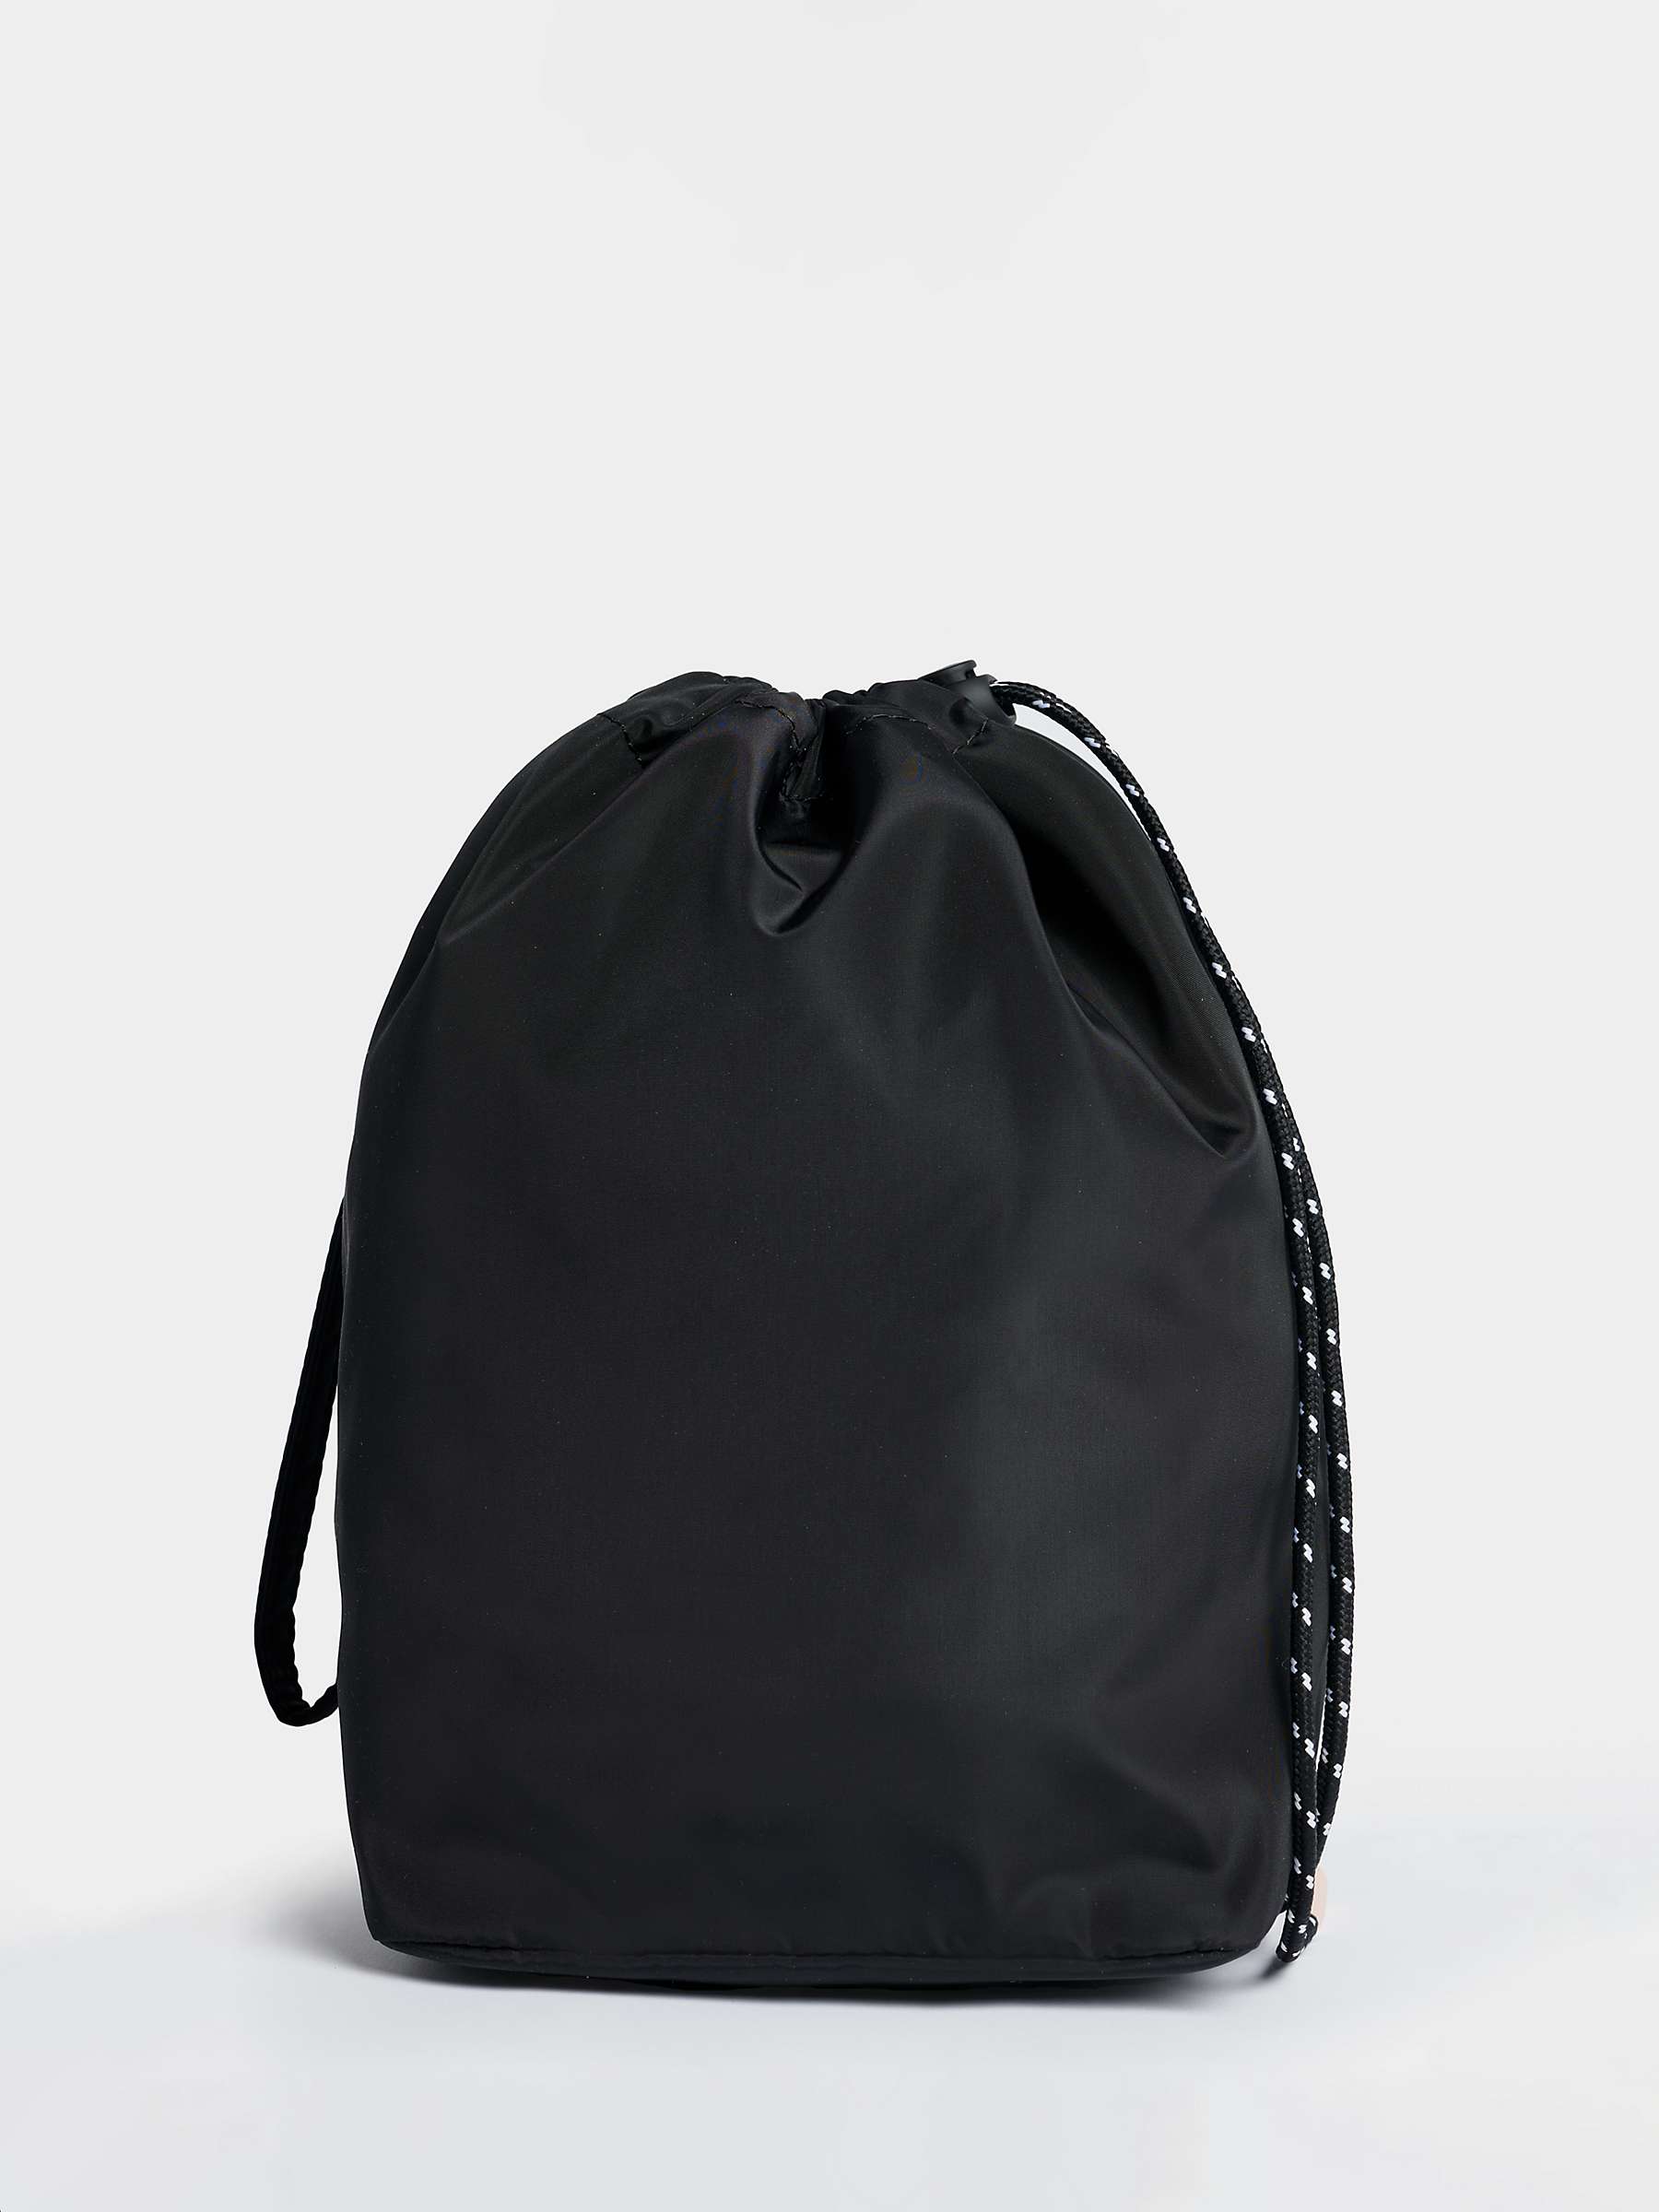 Buy Sweaty Betty Multi Purpose Bag Online at johnlewis.com